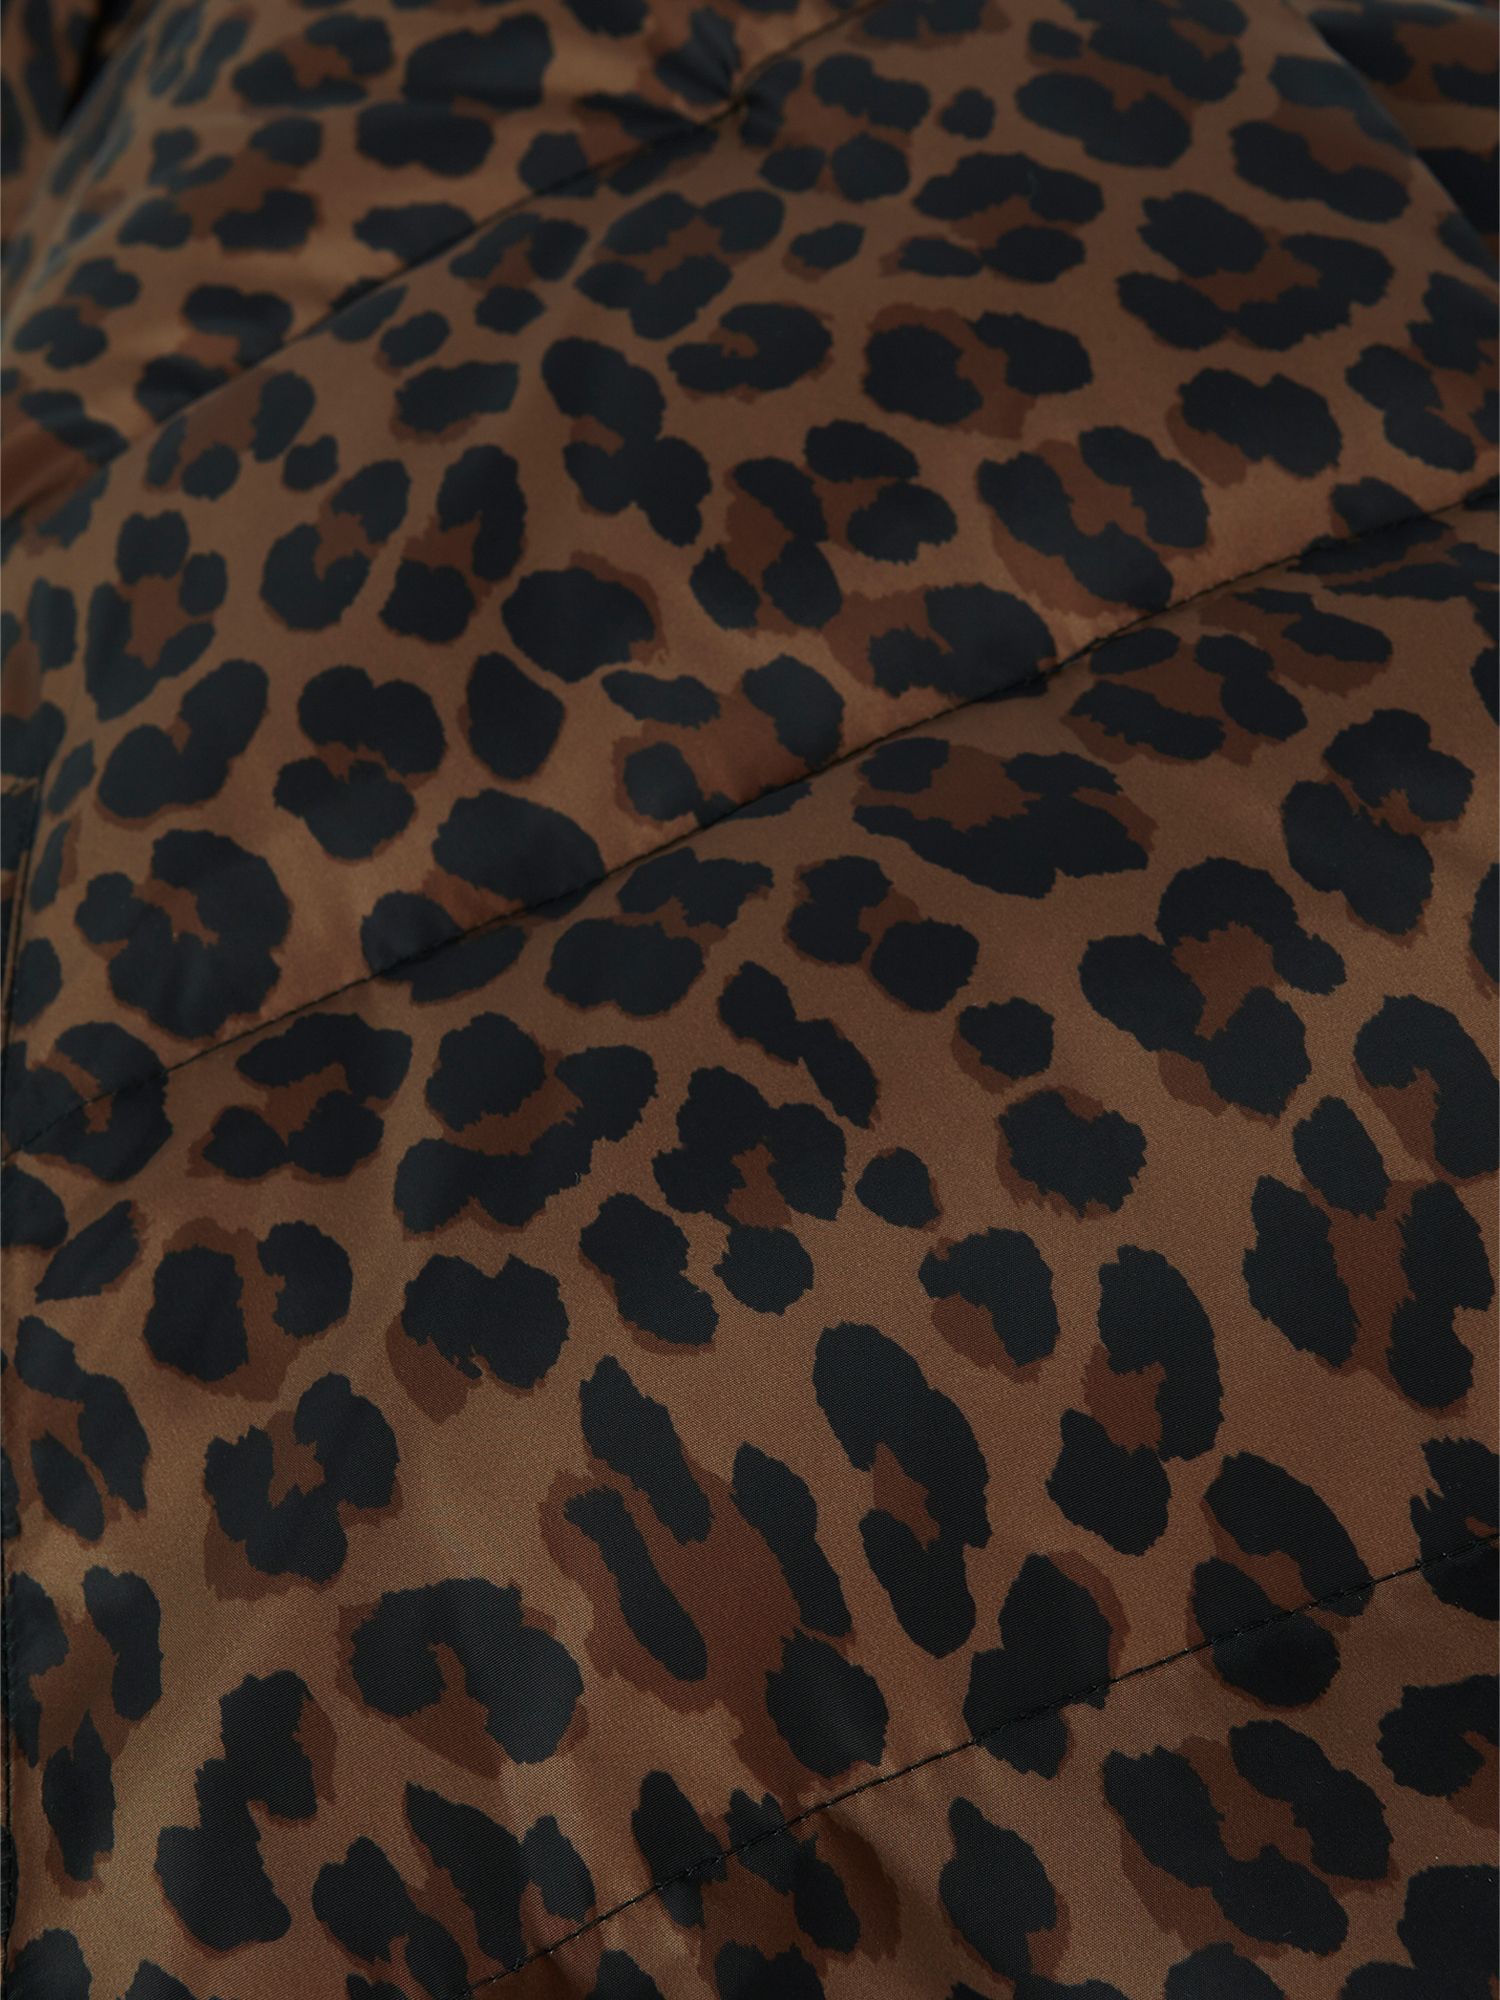 Buy Hobbs Heather Leopard Print Puffer Jacket, Camel Online at johnlewis.com